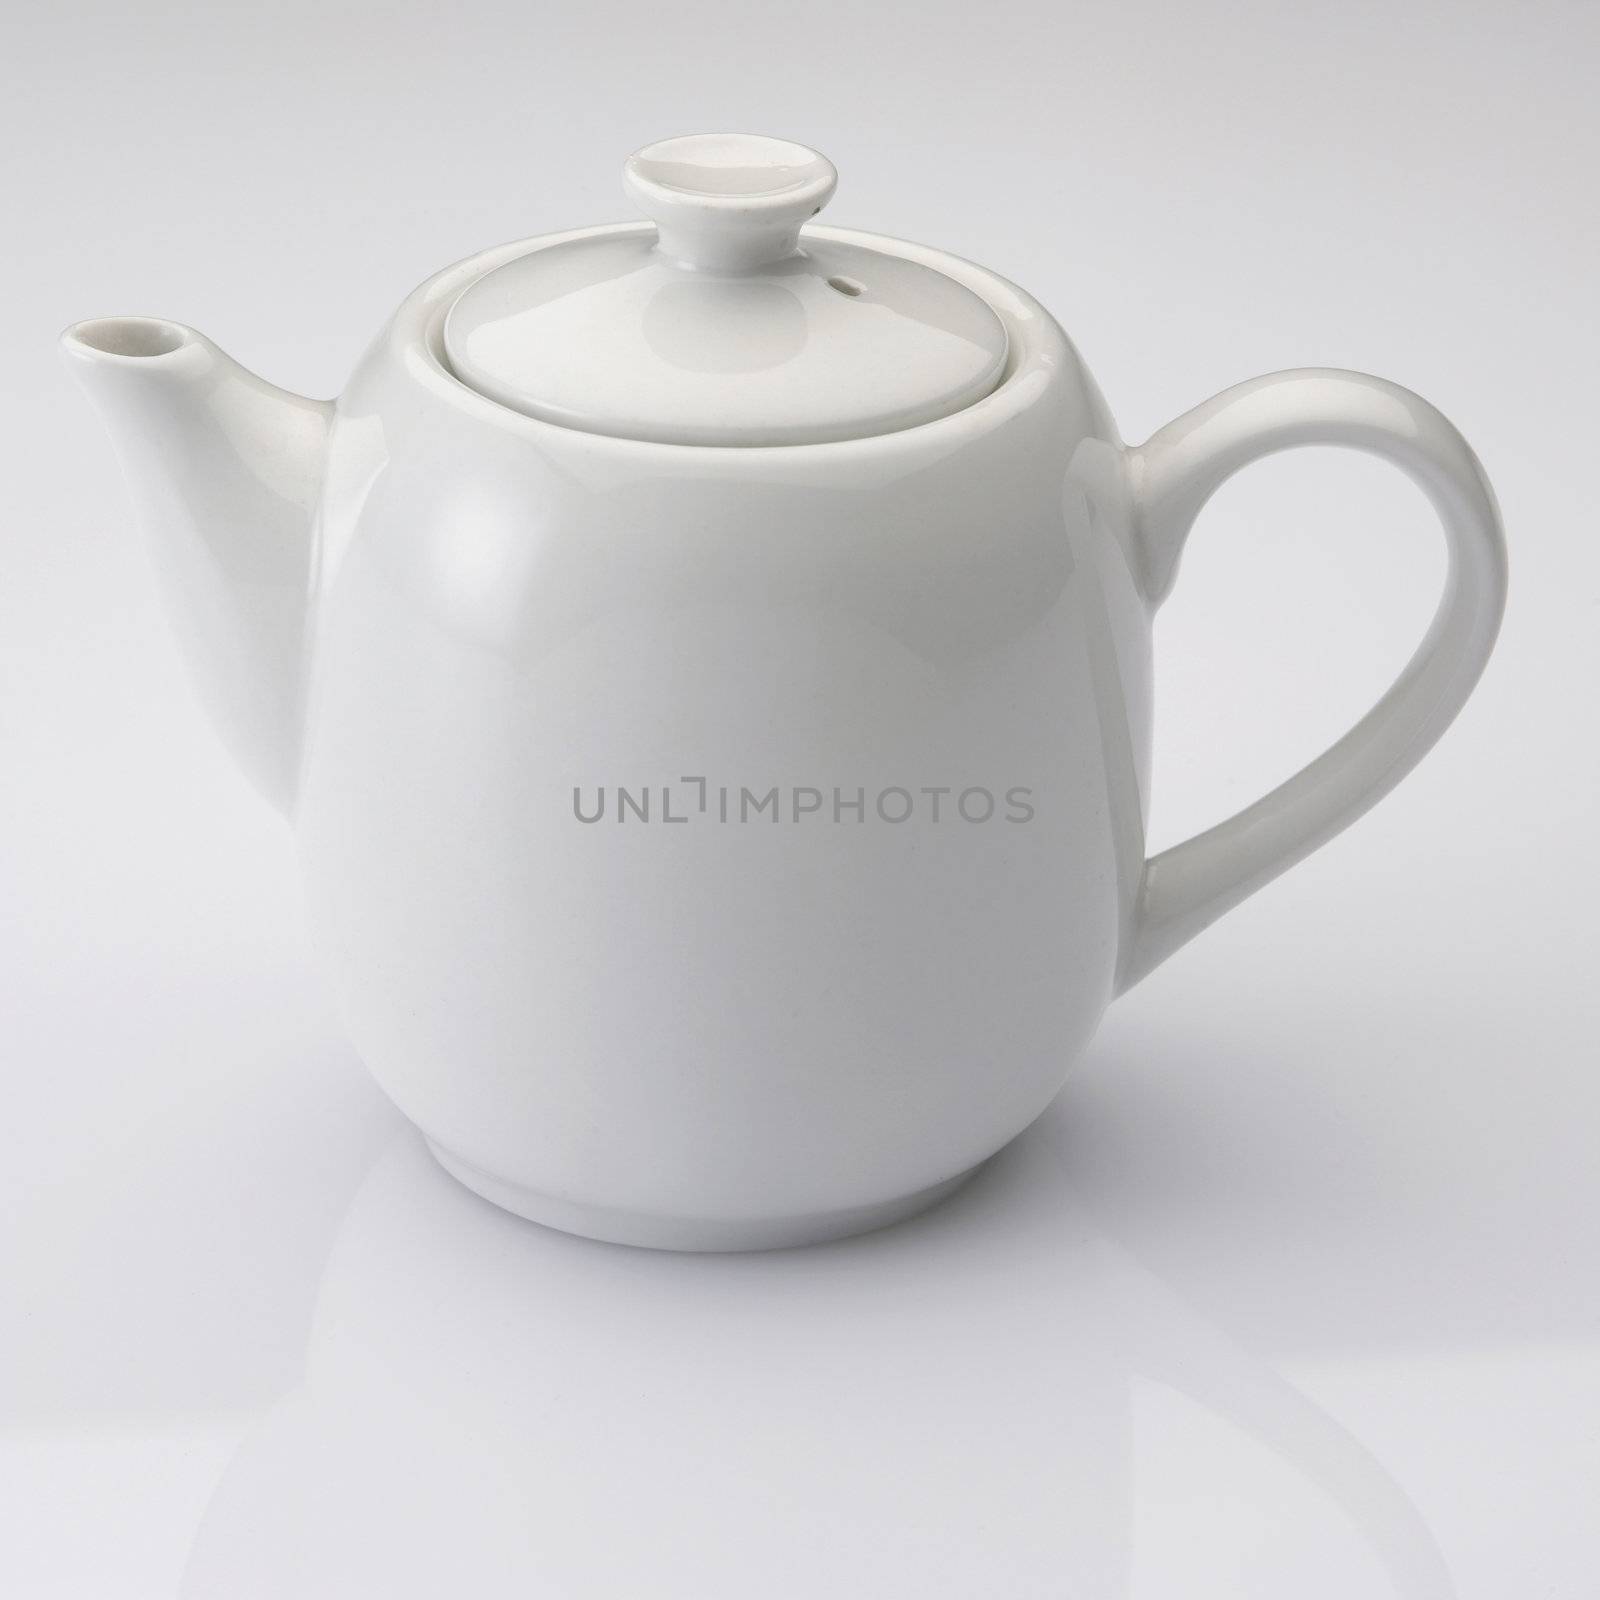 close up of the white tea pot on plain background